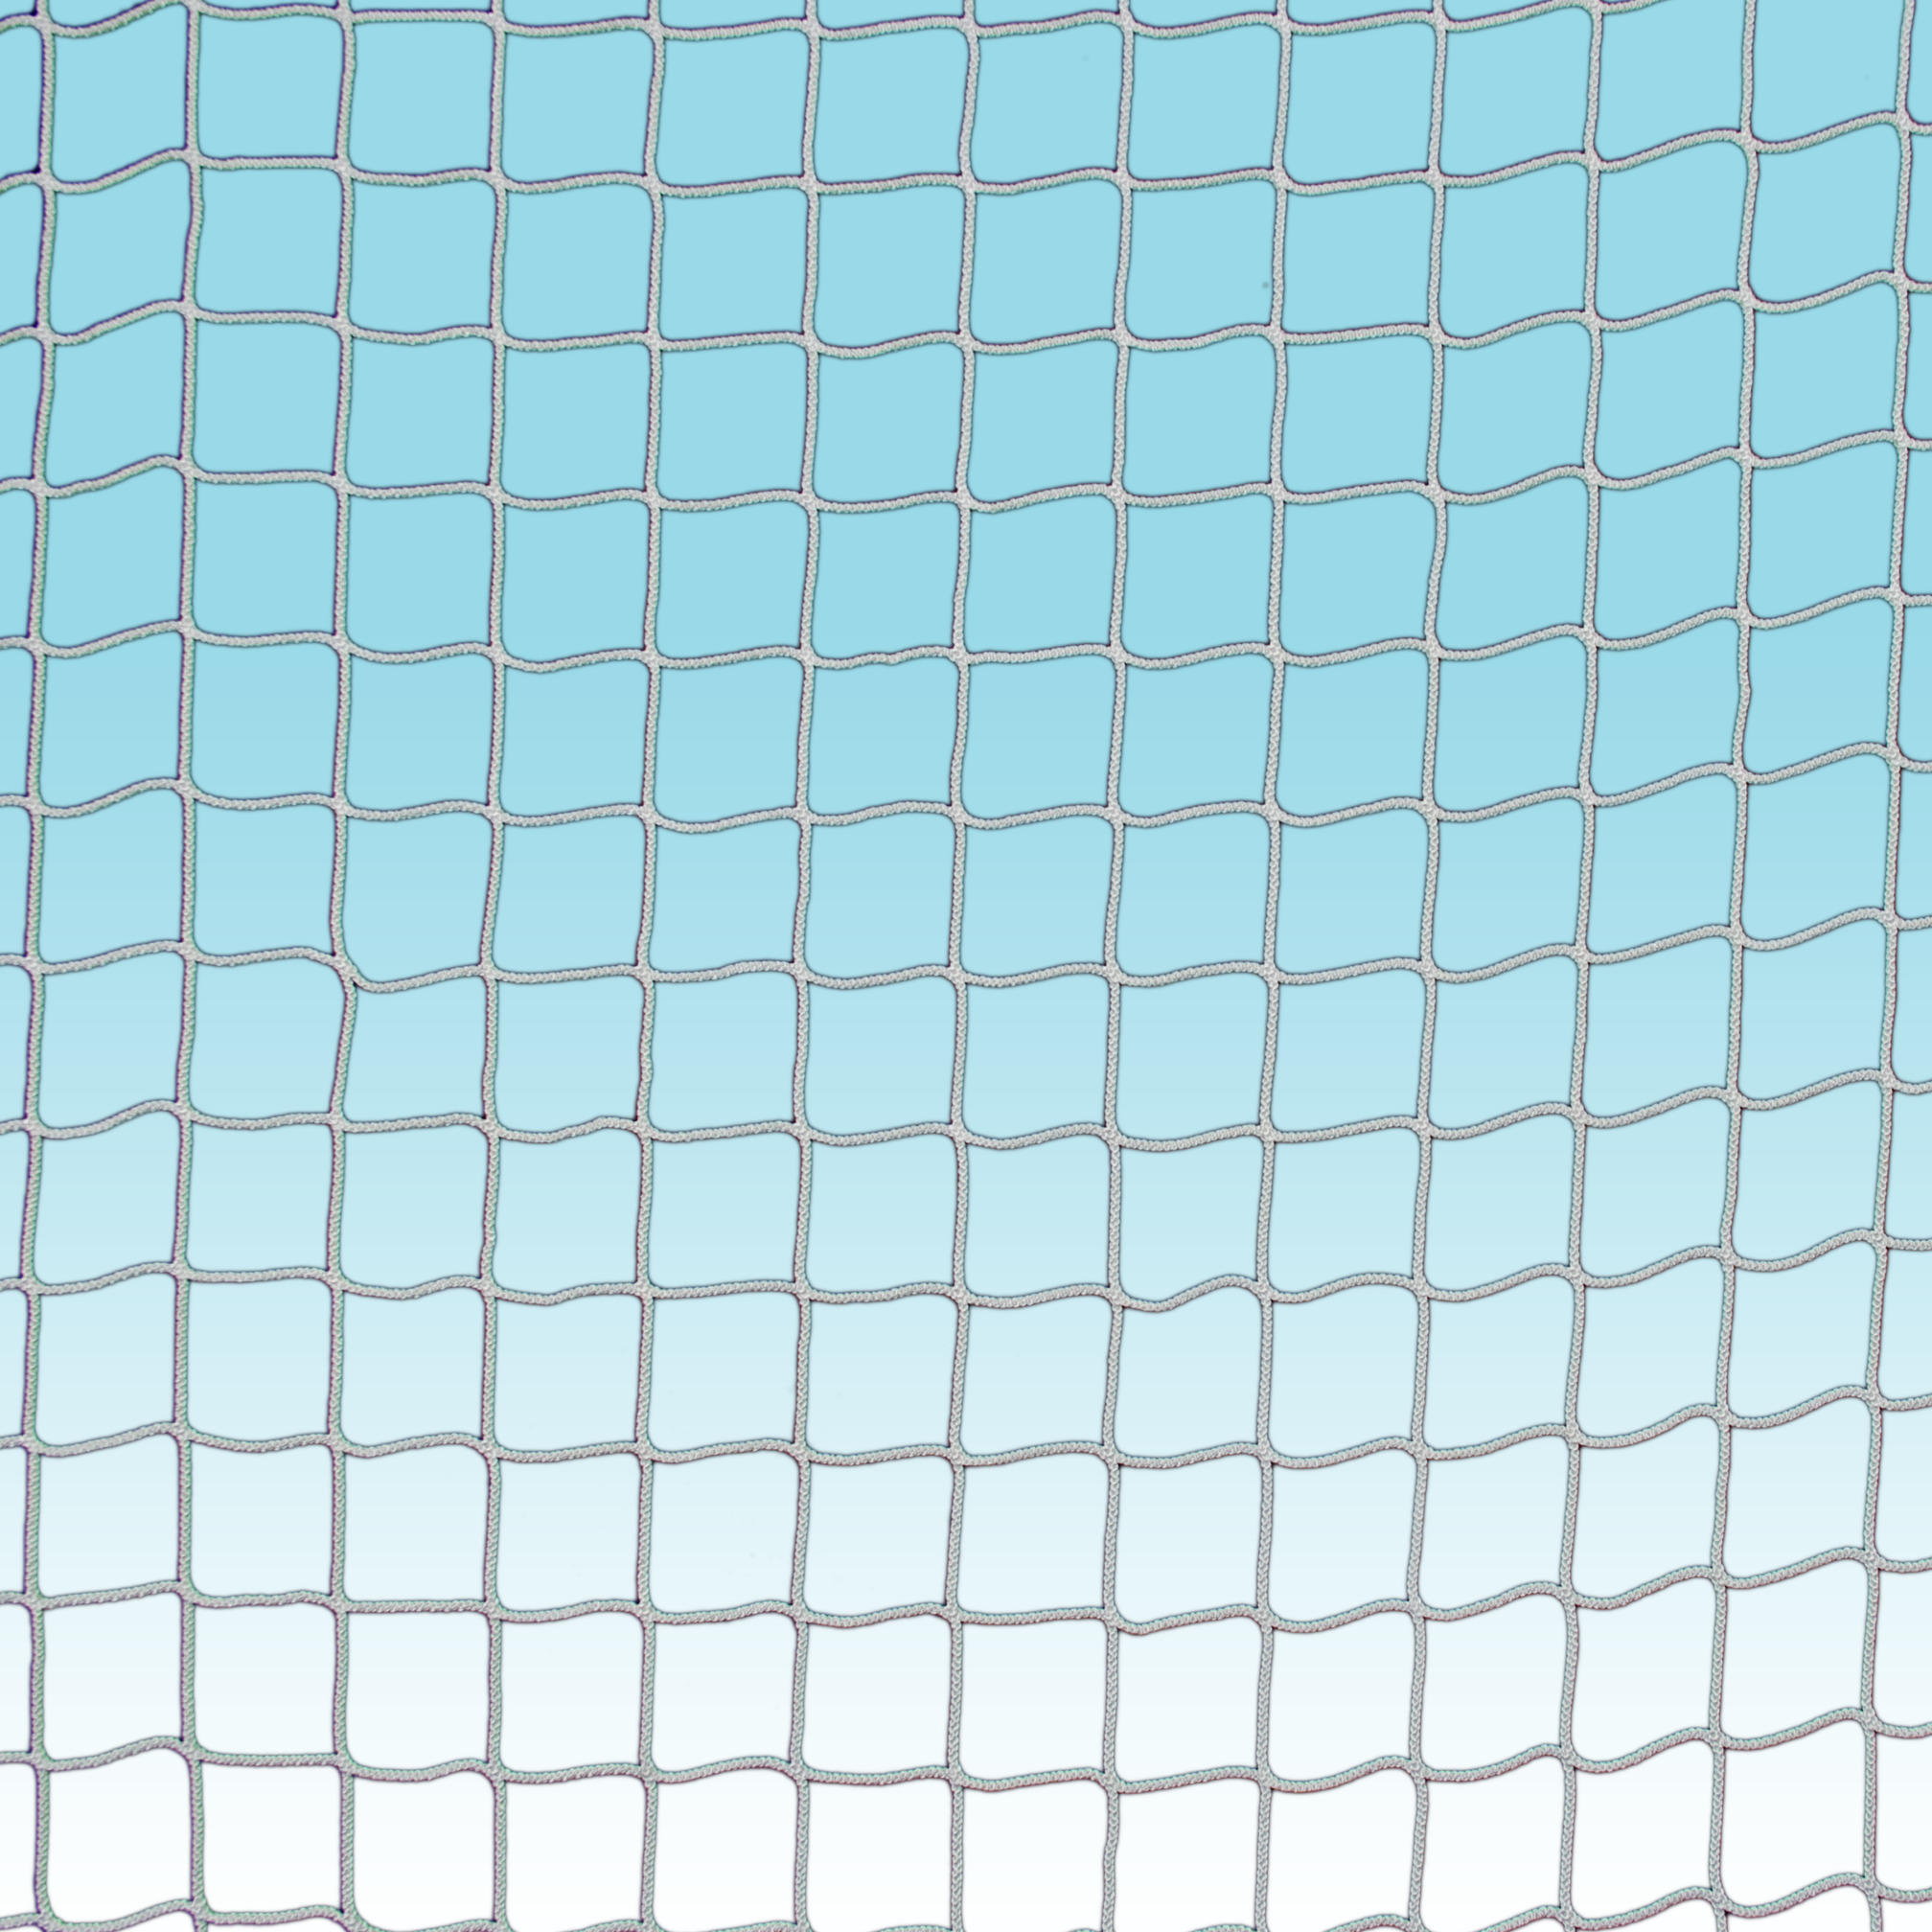 Net for training goal 150x75 cm, mesh 4x4 cm, per piece